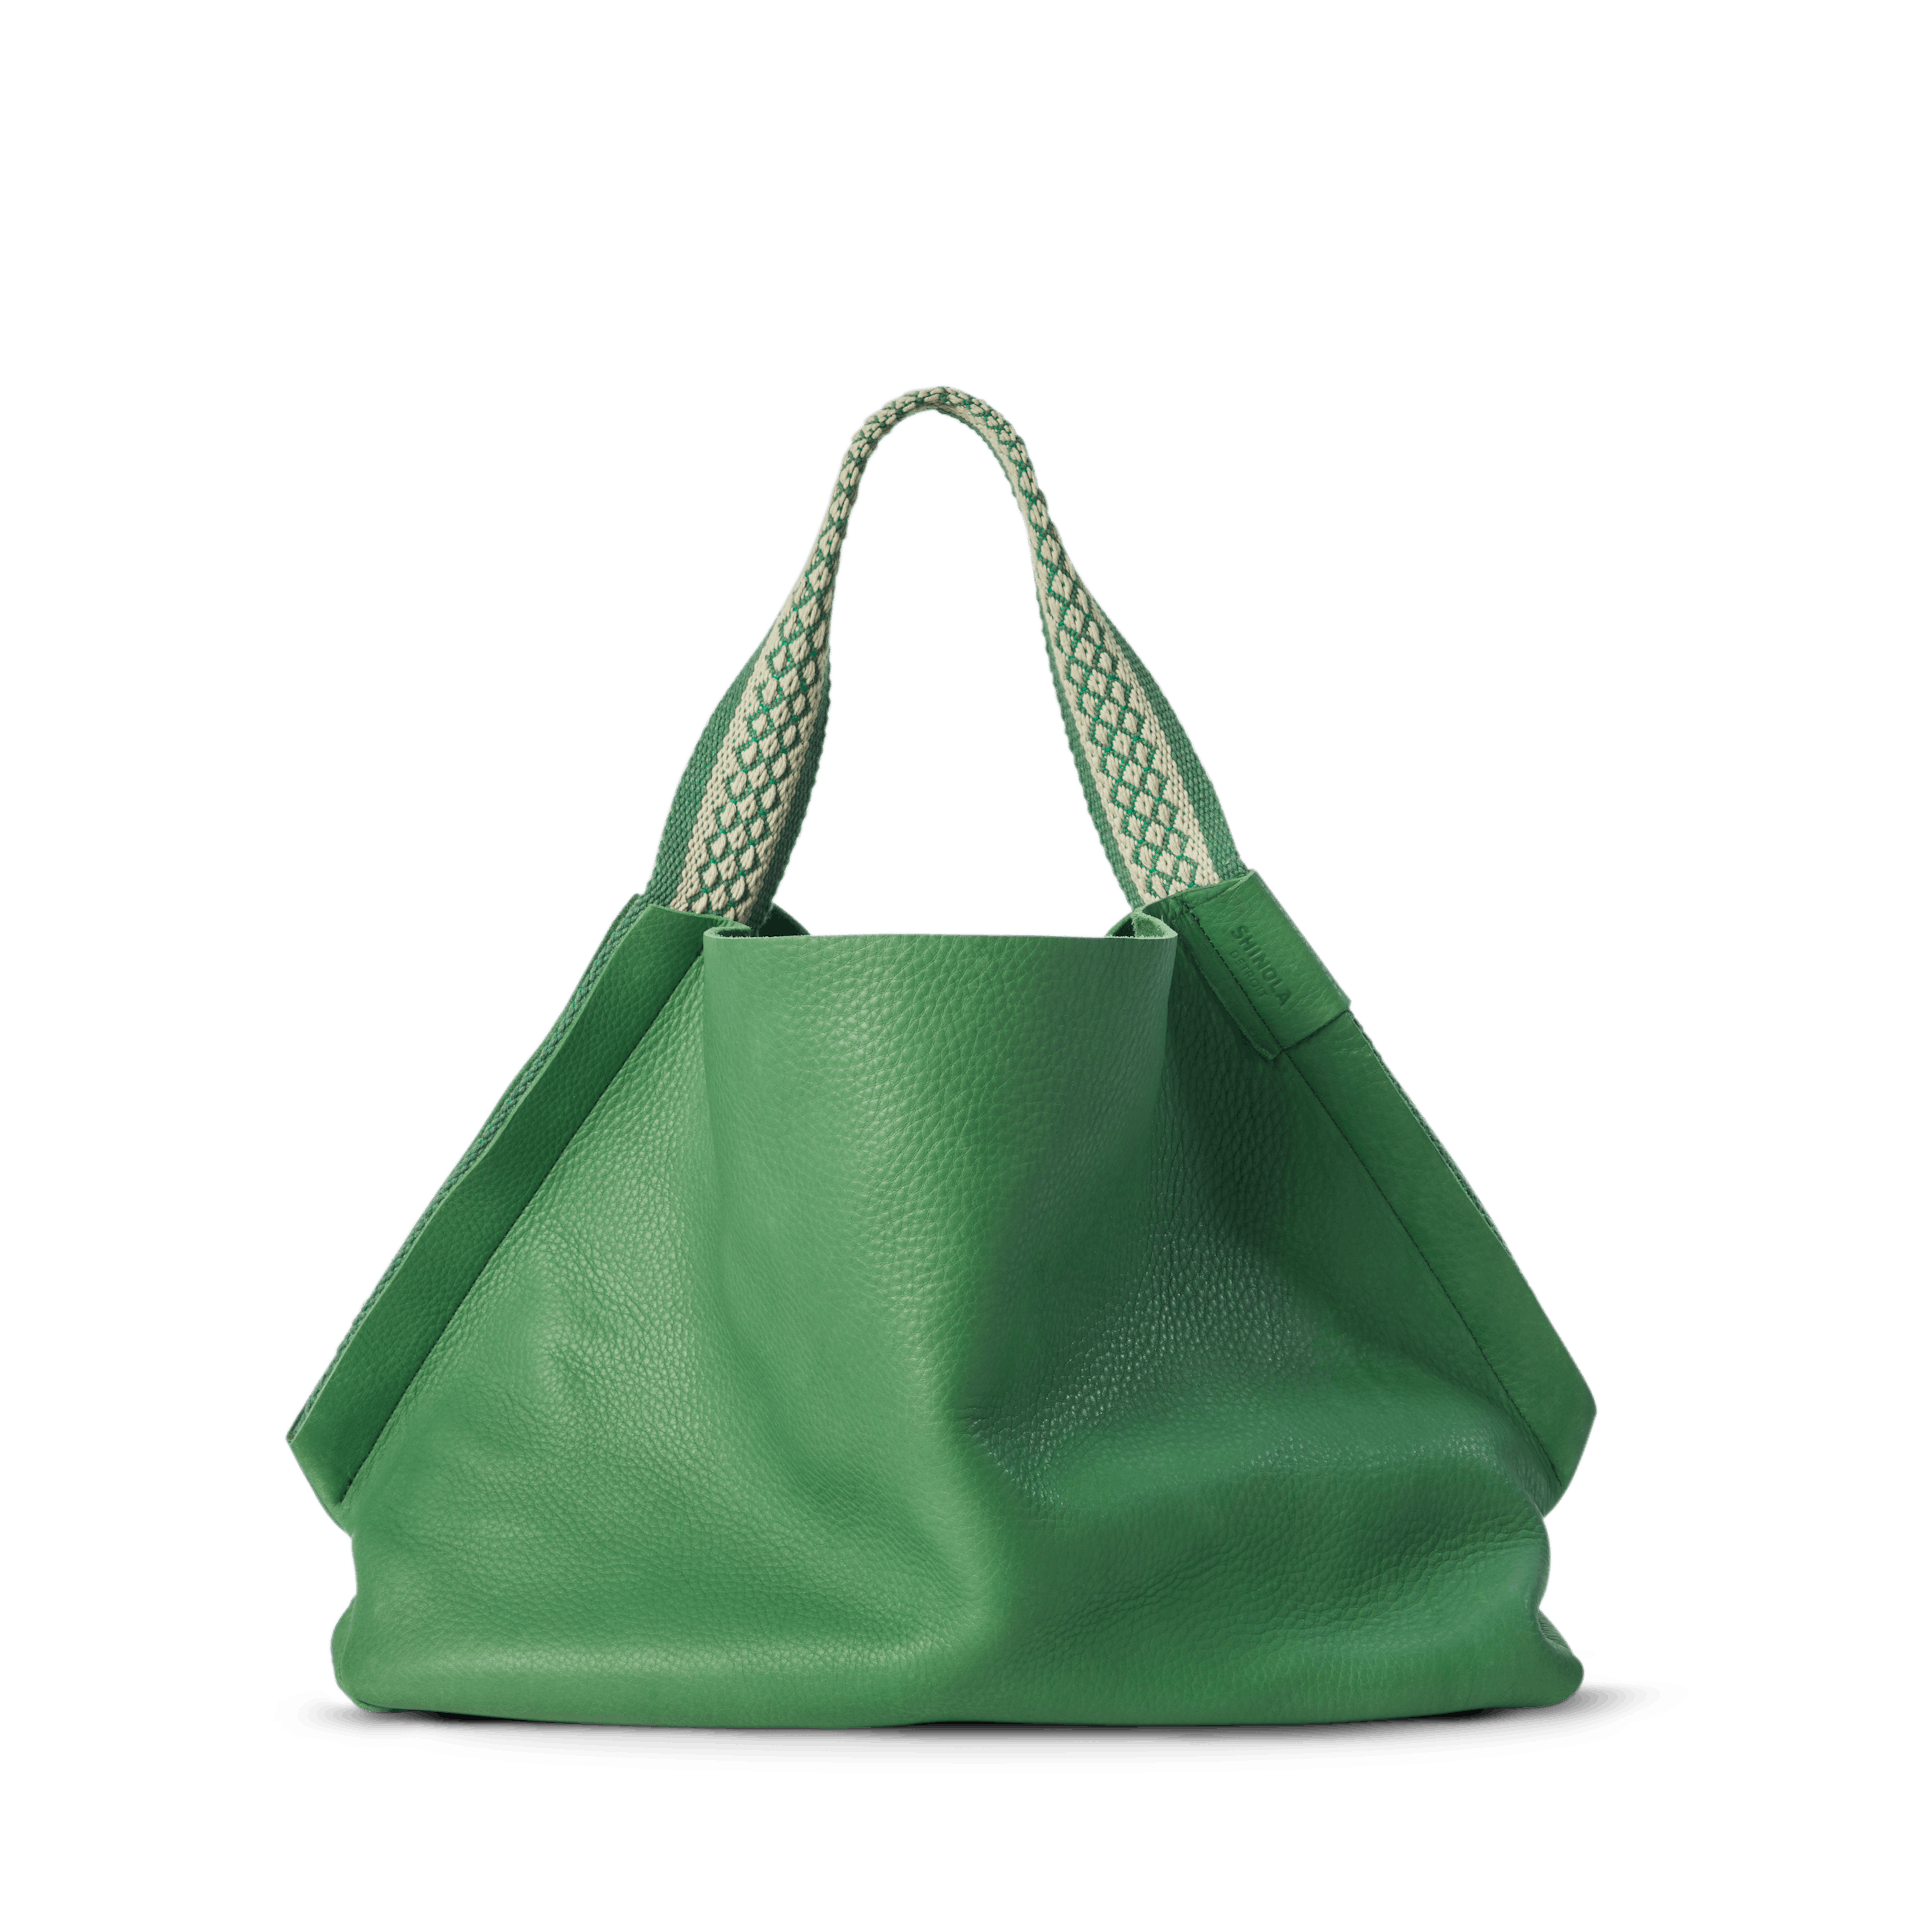 Bags - Shop Crossbody Bags, Shoulder Bags, and More